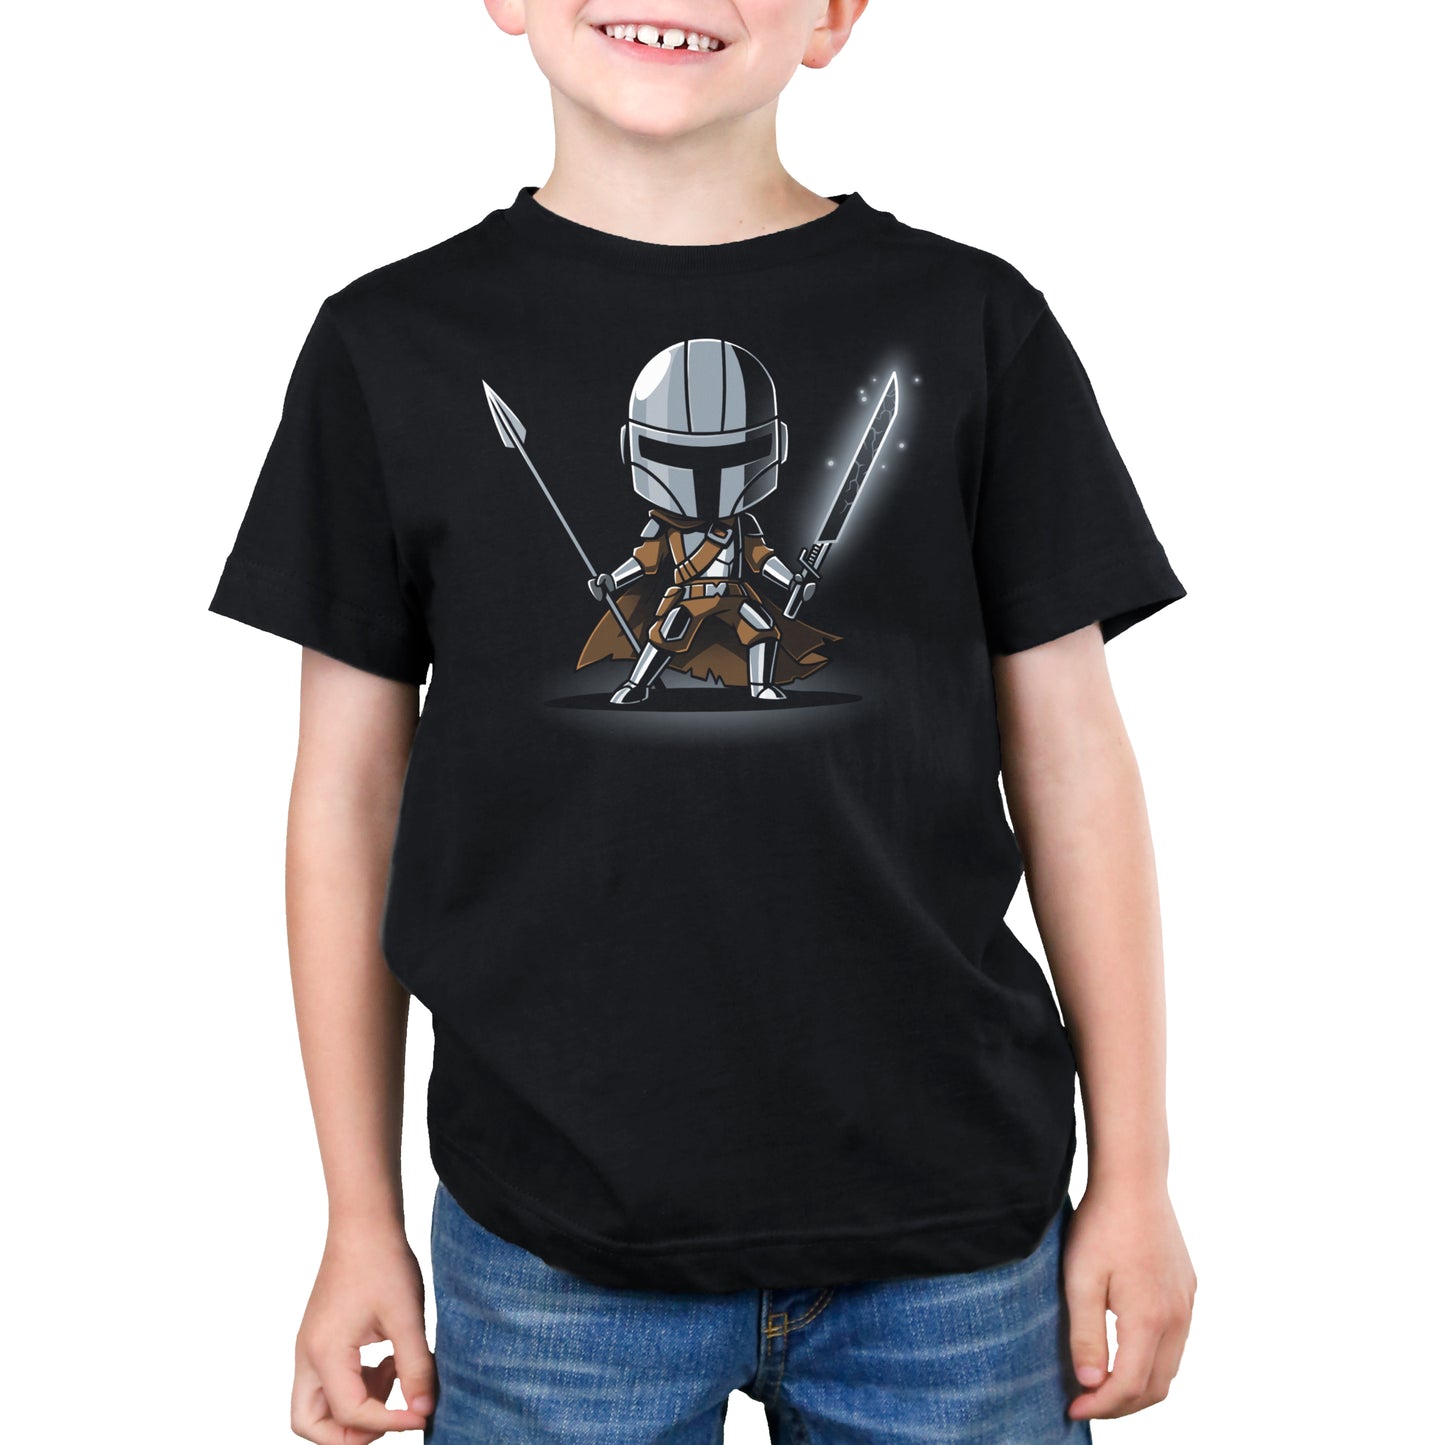 Officially licensed Star Wars Beskar Spear & Dark Saber kid's t-shirt.